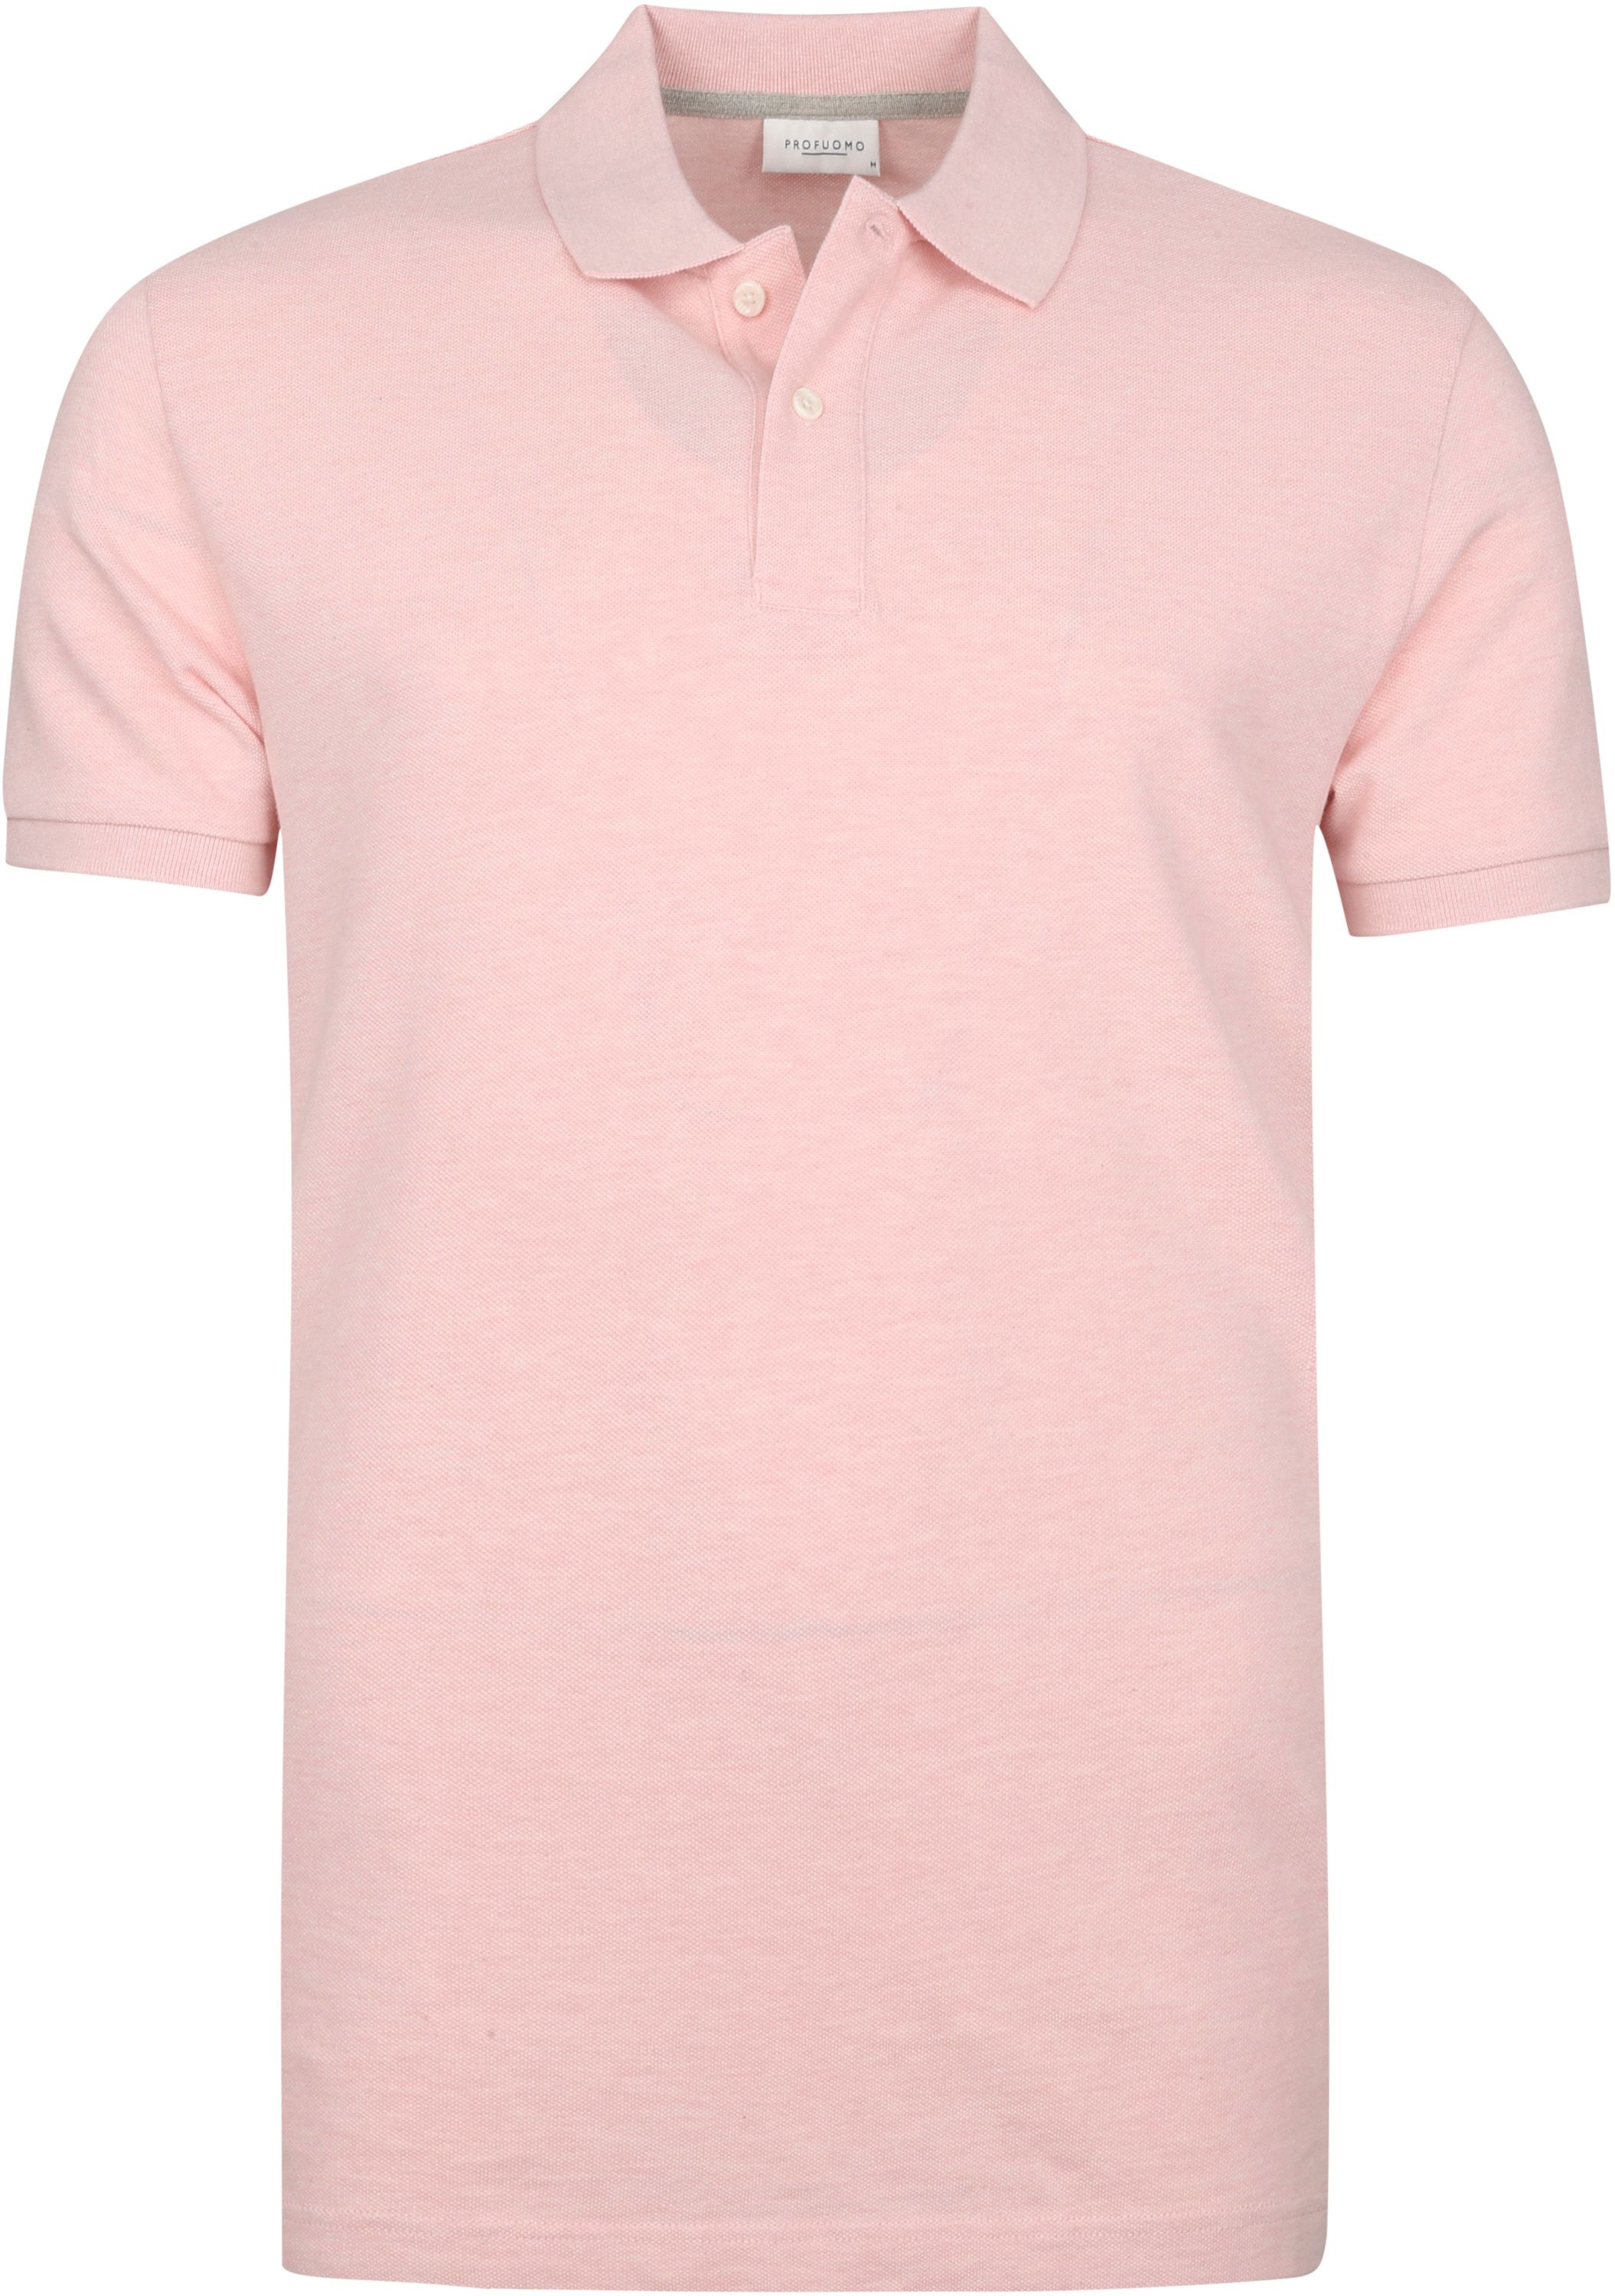 Profuomo Pique Polo Shirt Pink size L